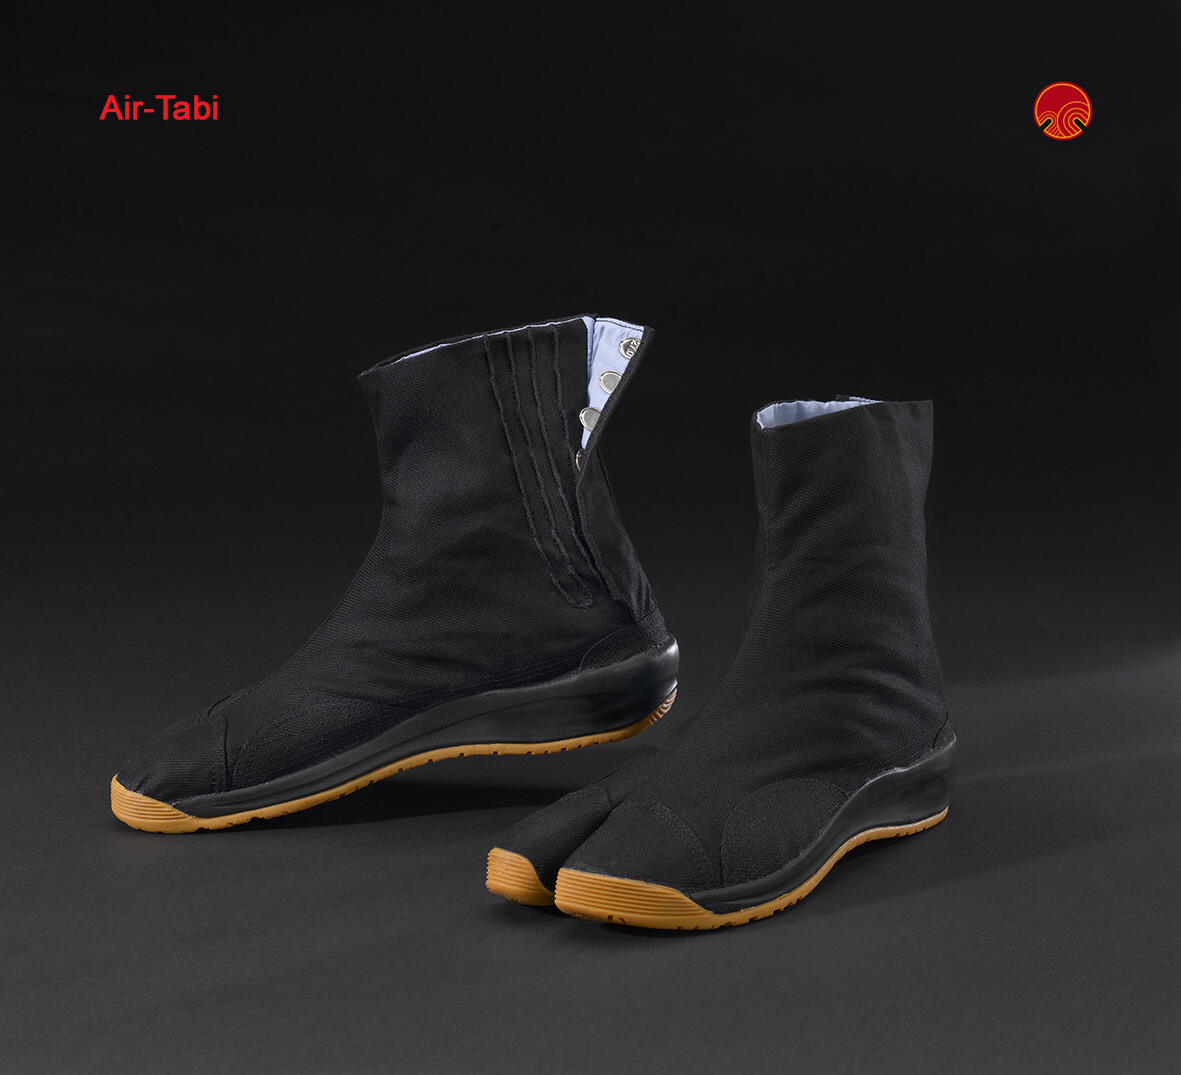 Japanese Matsuri Air Tabi-Shoes in black (57€)